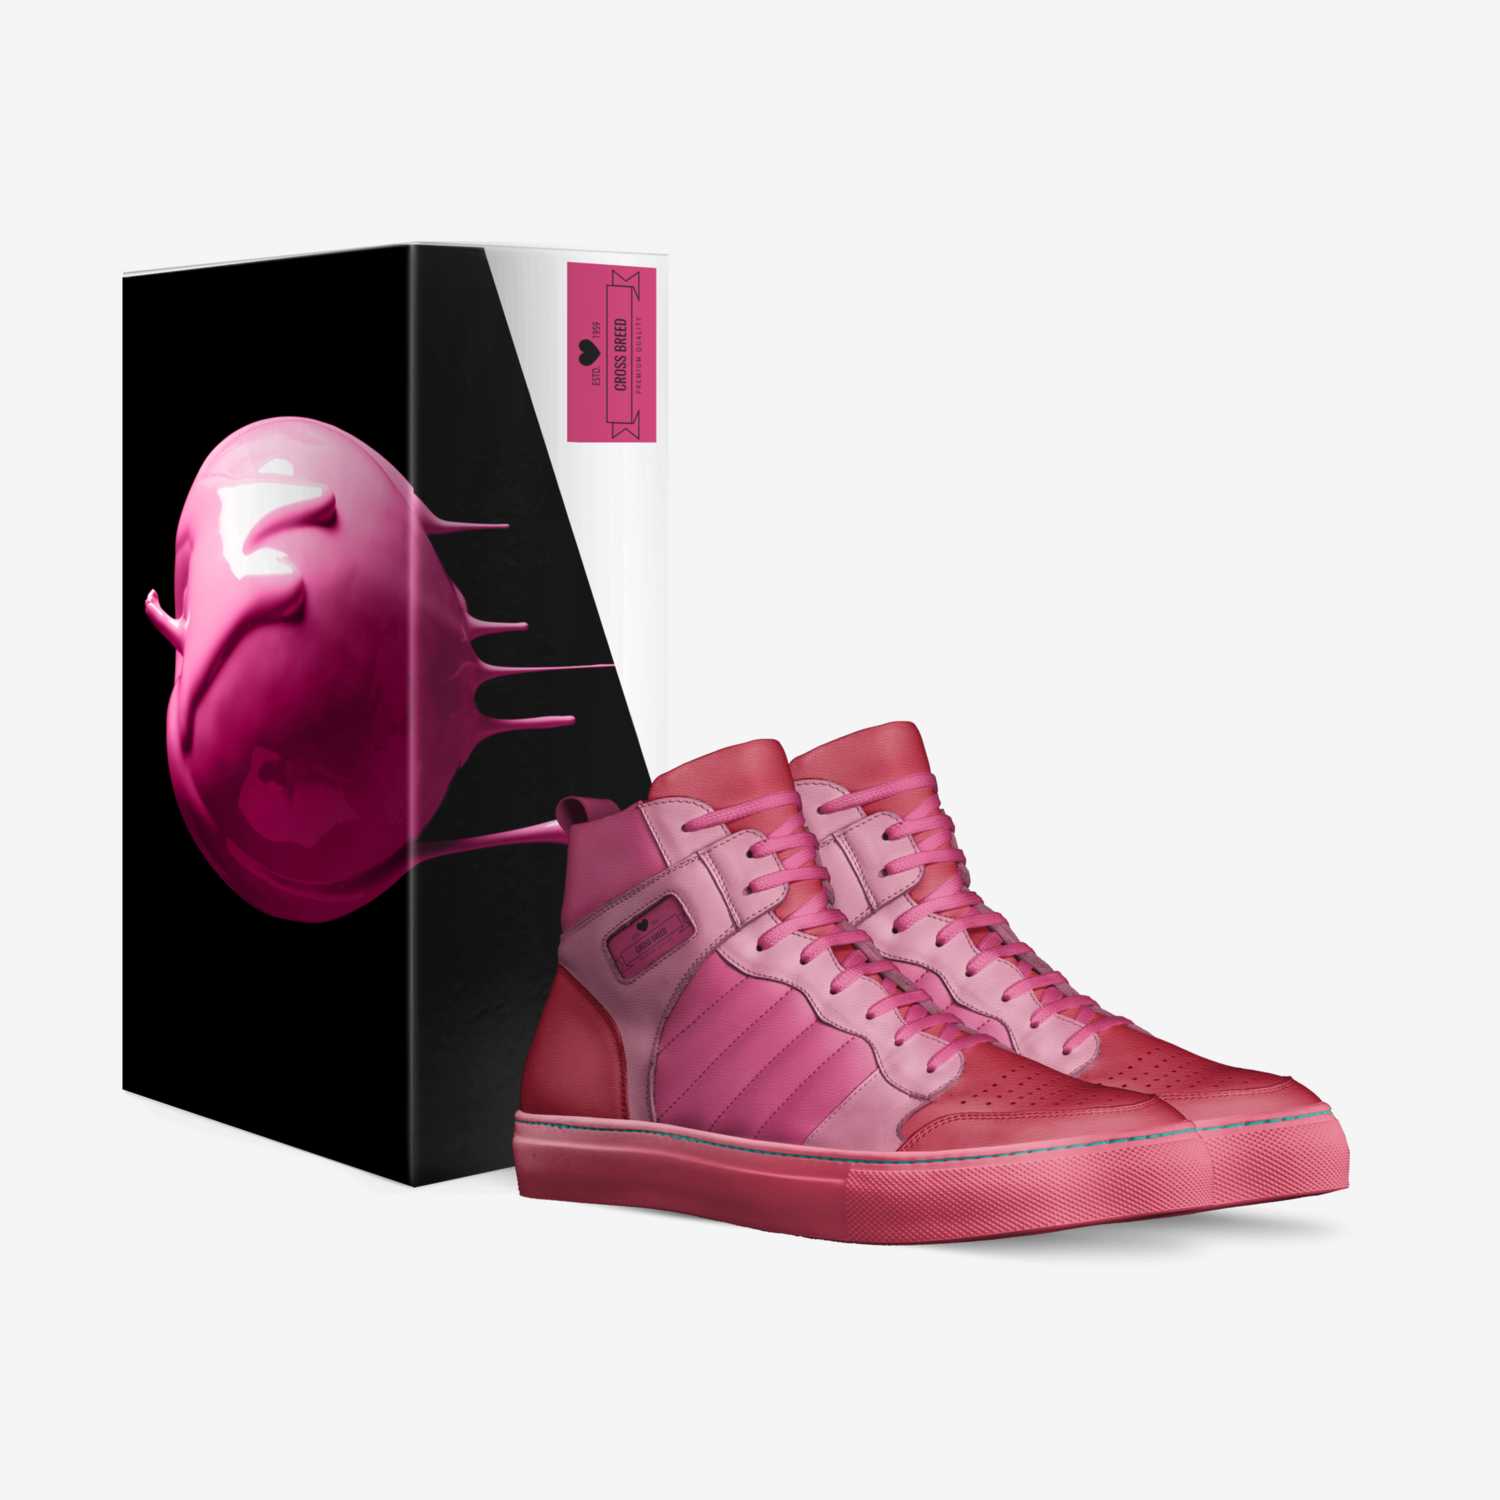 jordney custom made in Italy shoes by Jasmine Benjamin | Box view